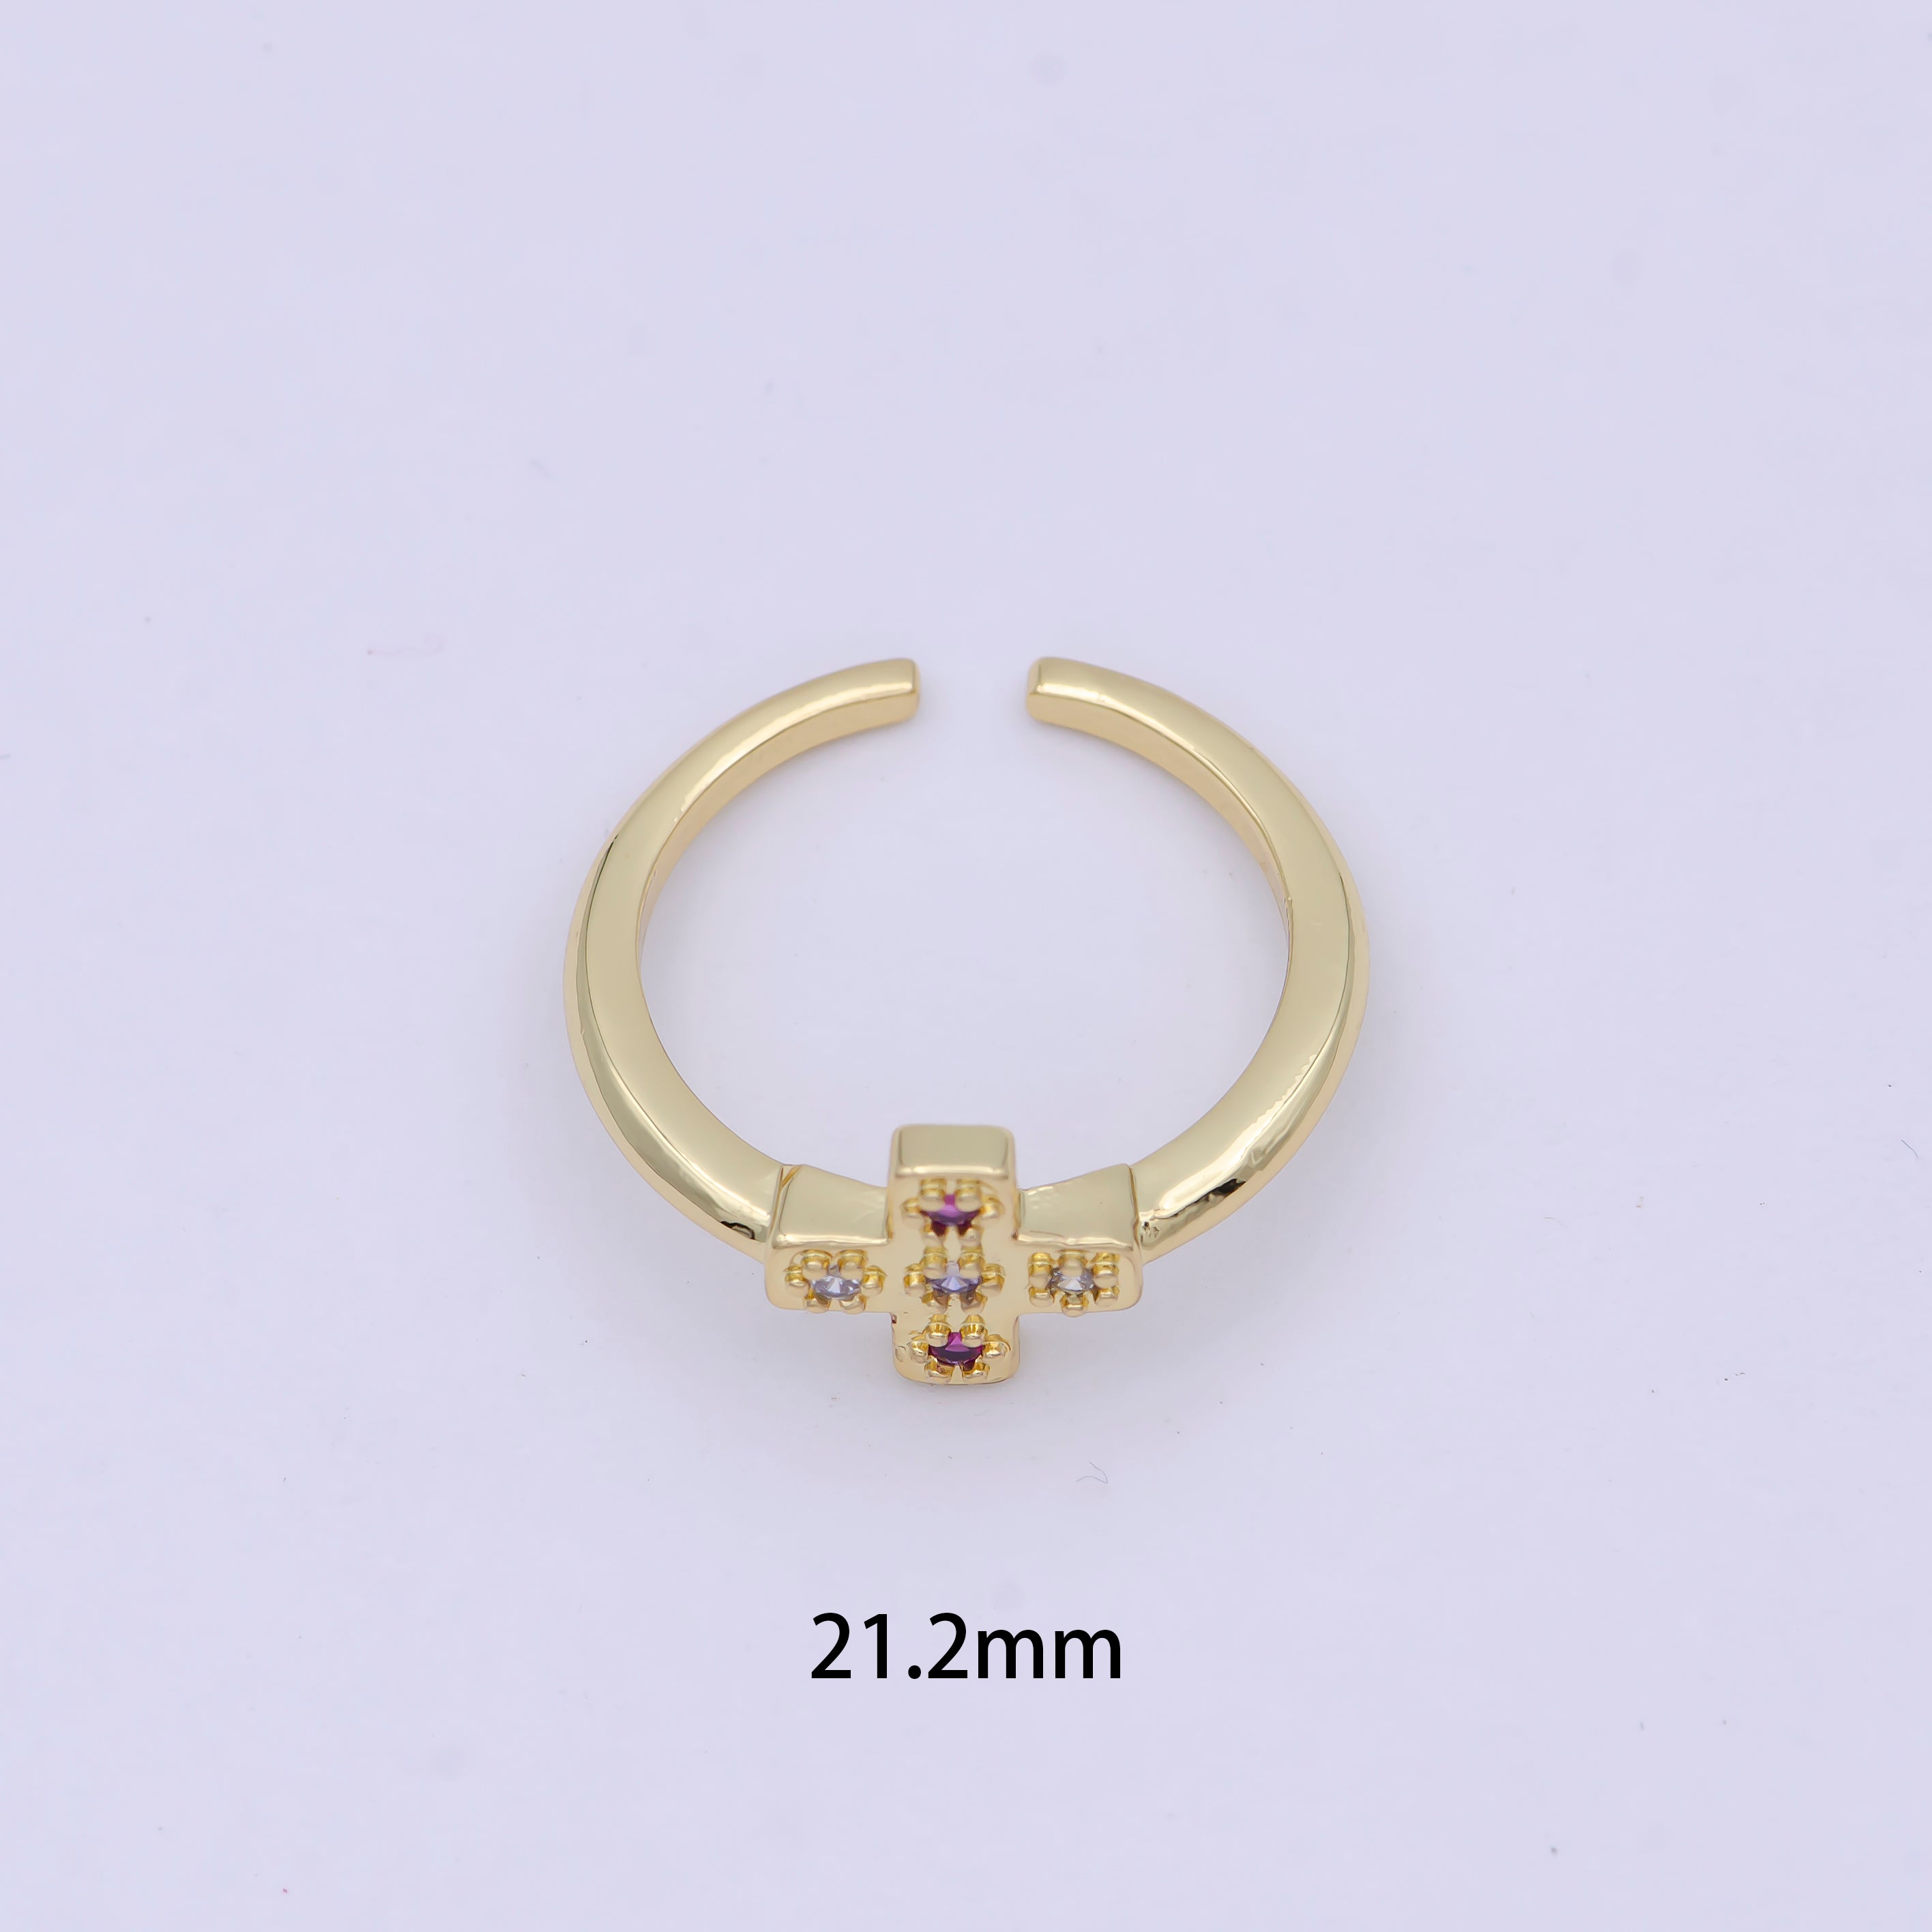 Mini Gold Cross Charm With Fuchsia Purple Cz Stone Open Adjustable Ring S-393 - DLUXCA